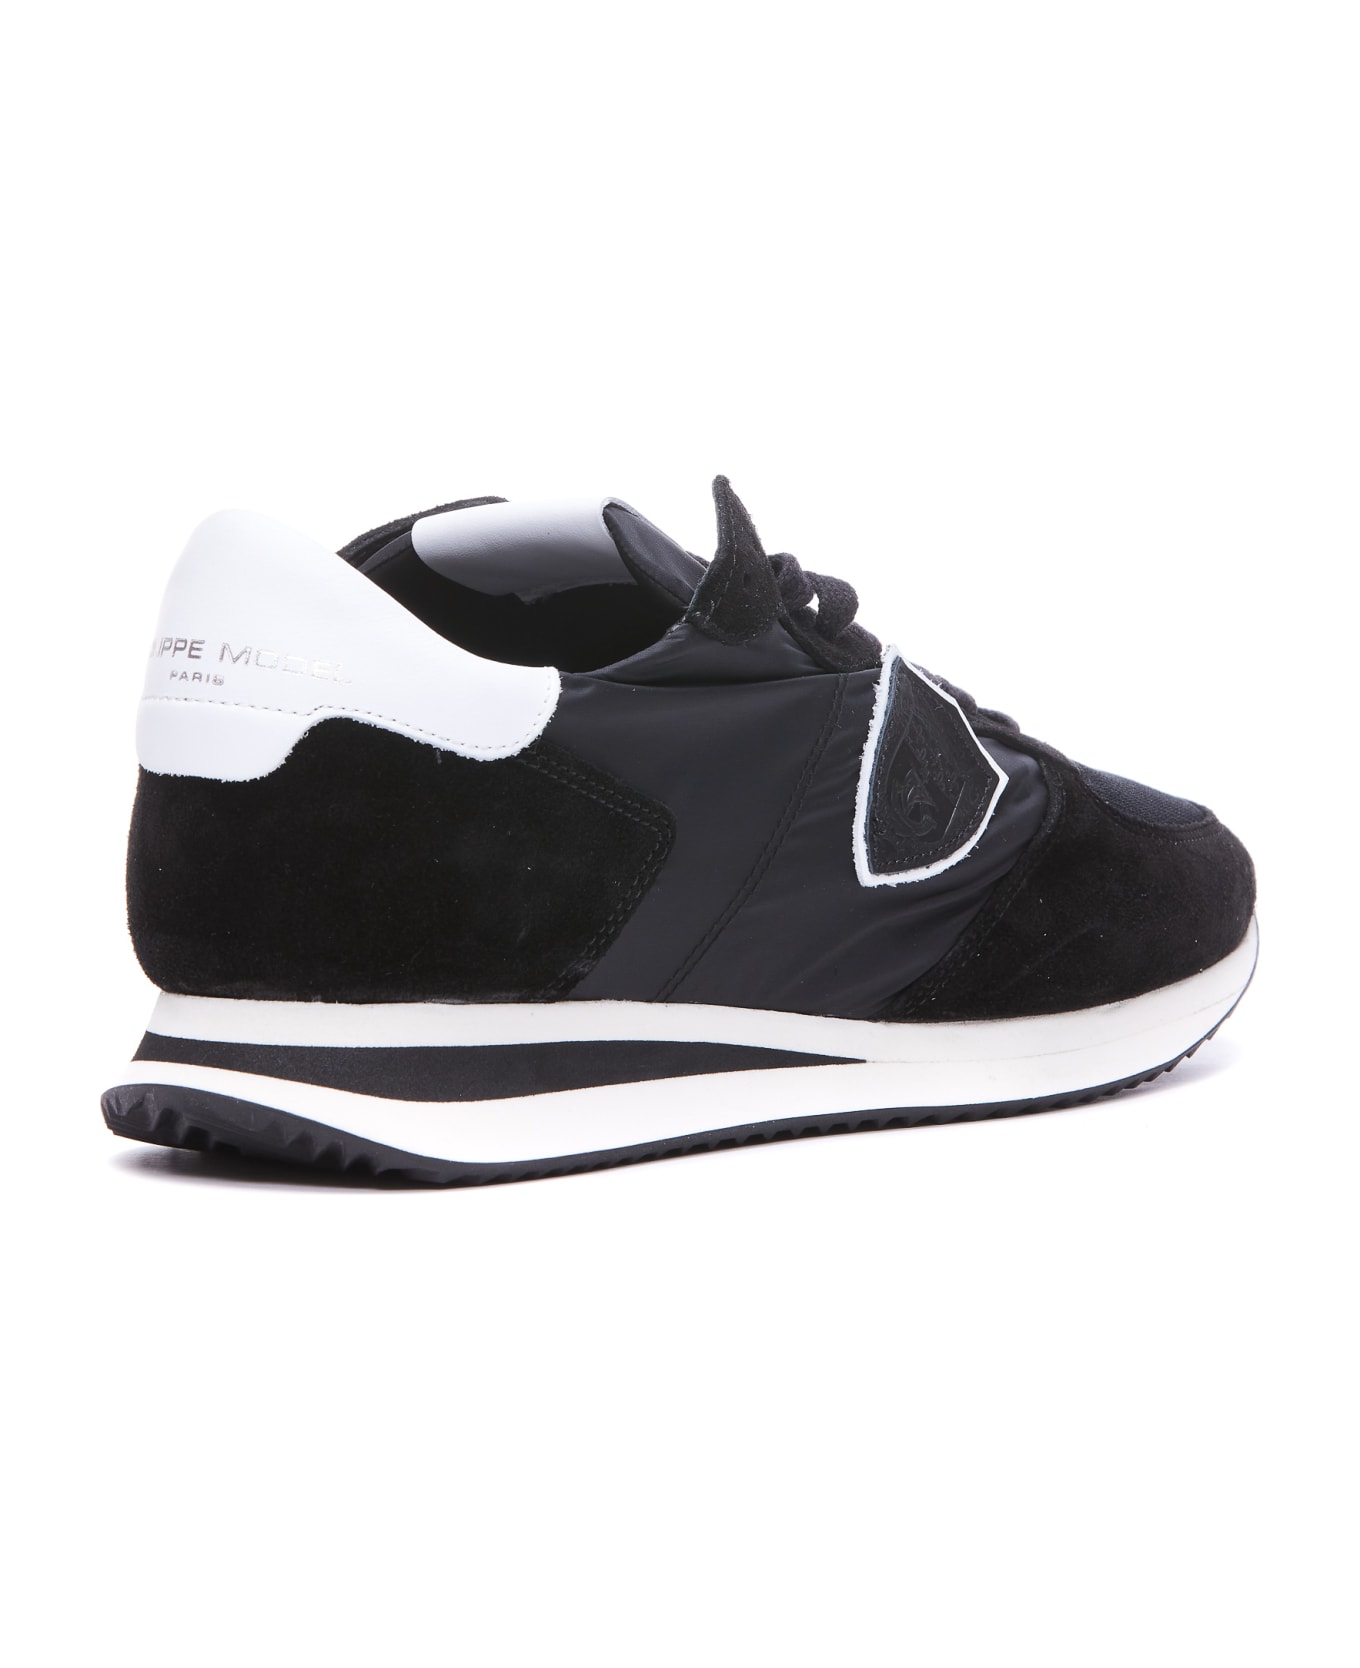 Philippe Model Trpx Sneakers - Black スニーカー